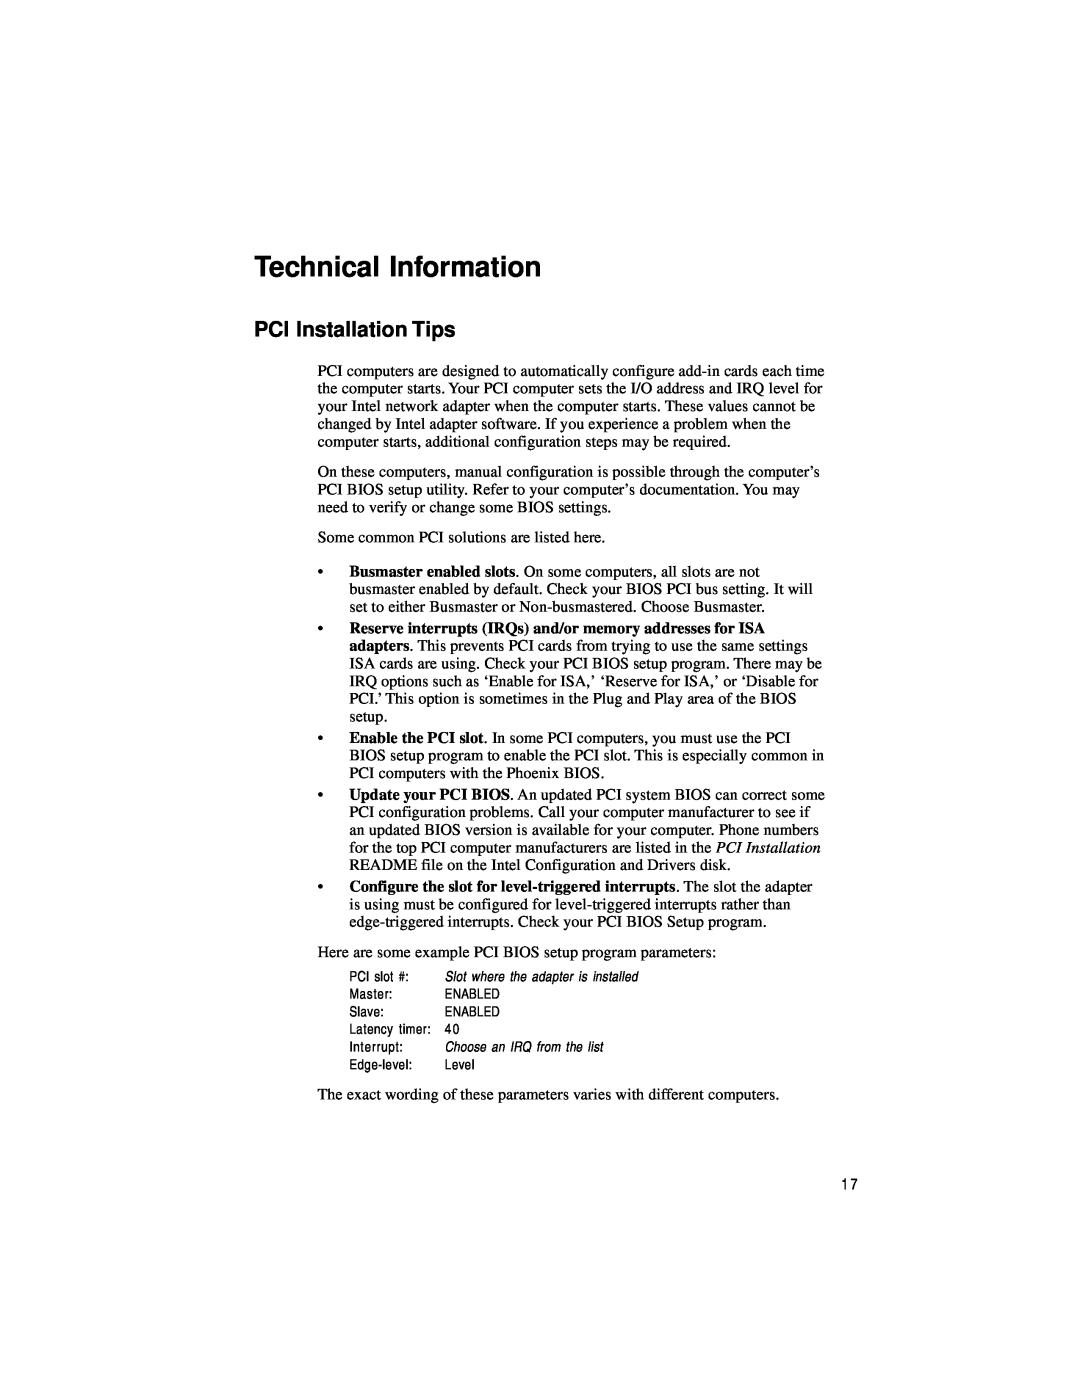 Intel PRO/100 TX PCI manual Technical Information, PCI Installation Tips 